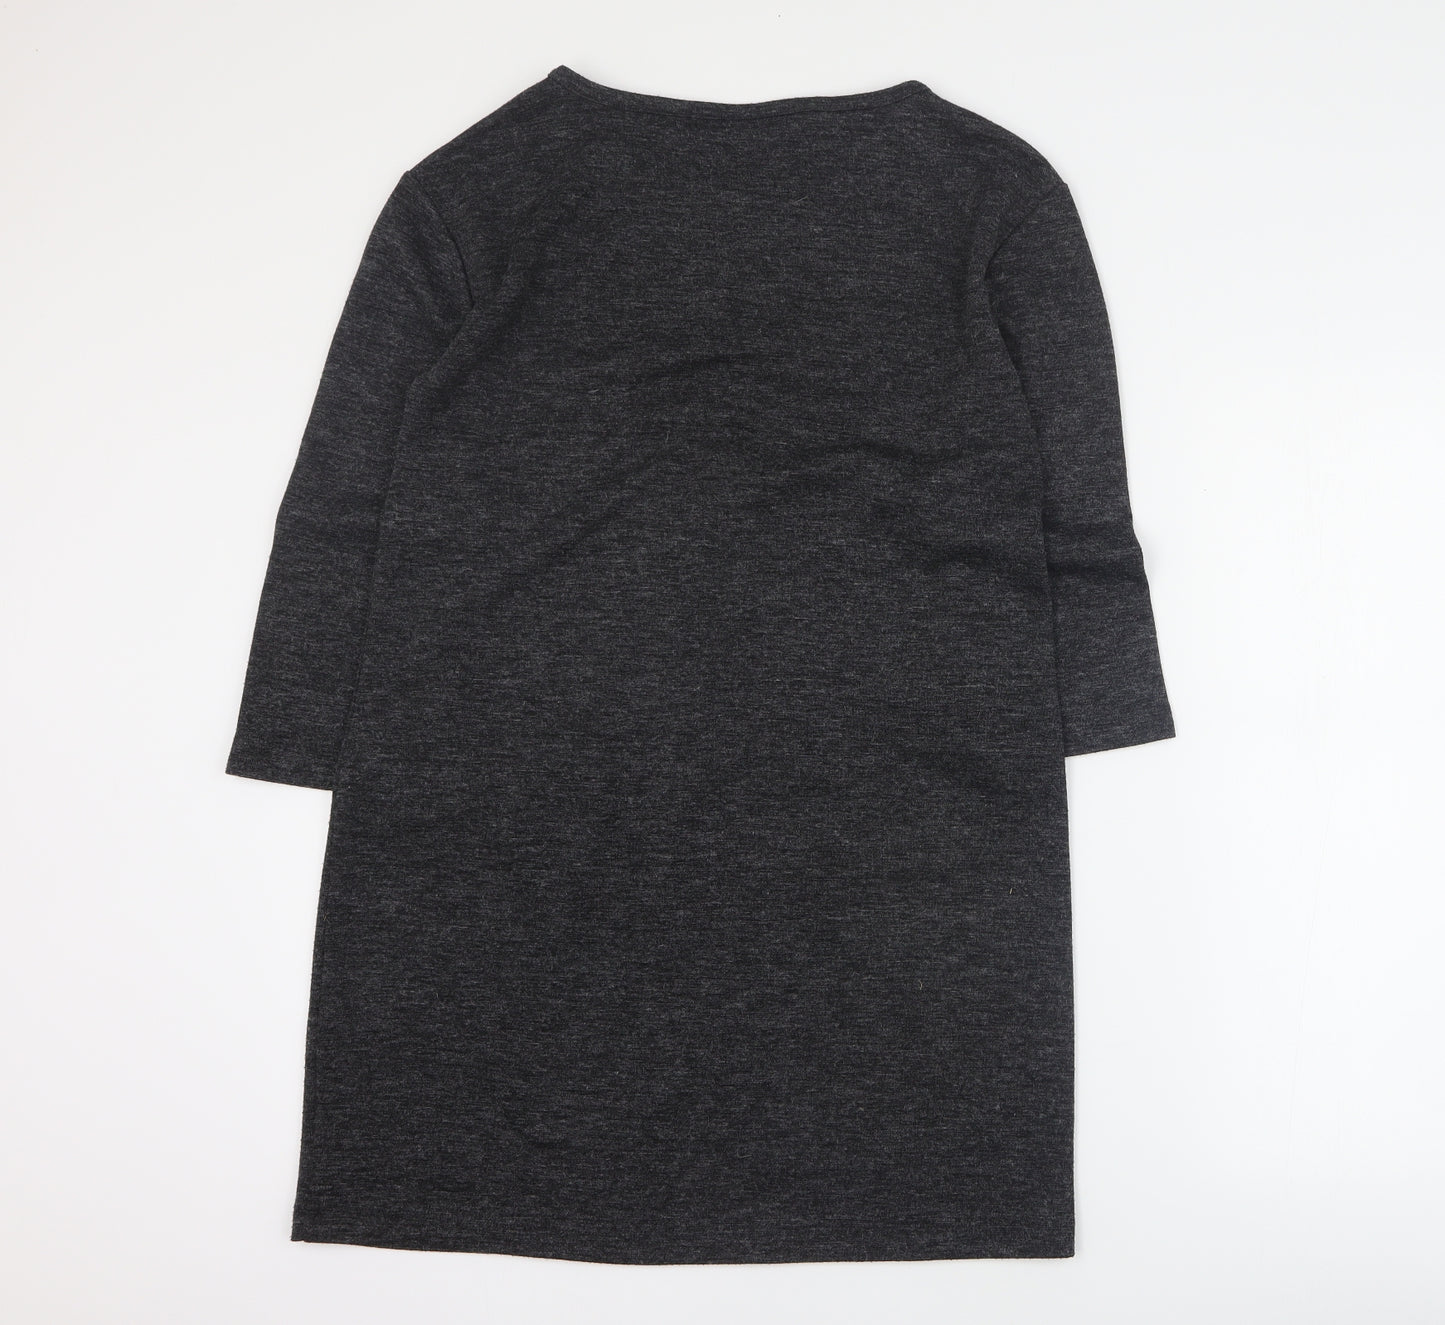 Adrienne Vittadini Womens Grey  Polyester Jumper Dress  Size M  Round Neck Pullover